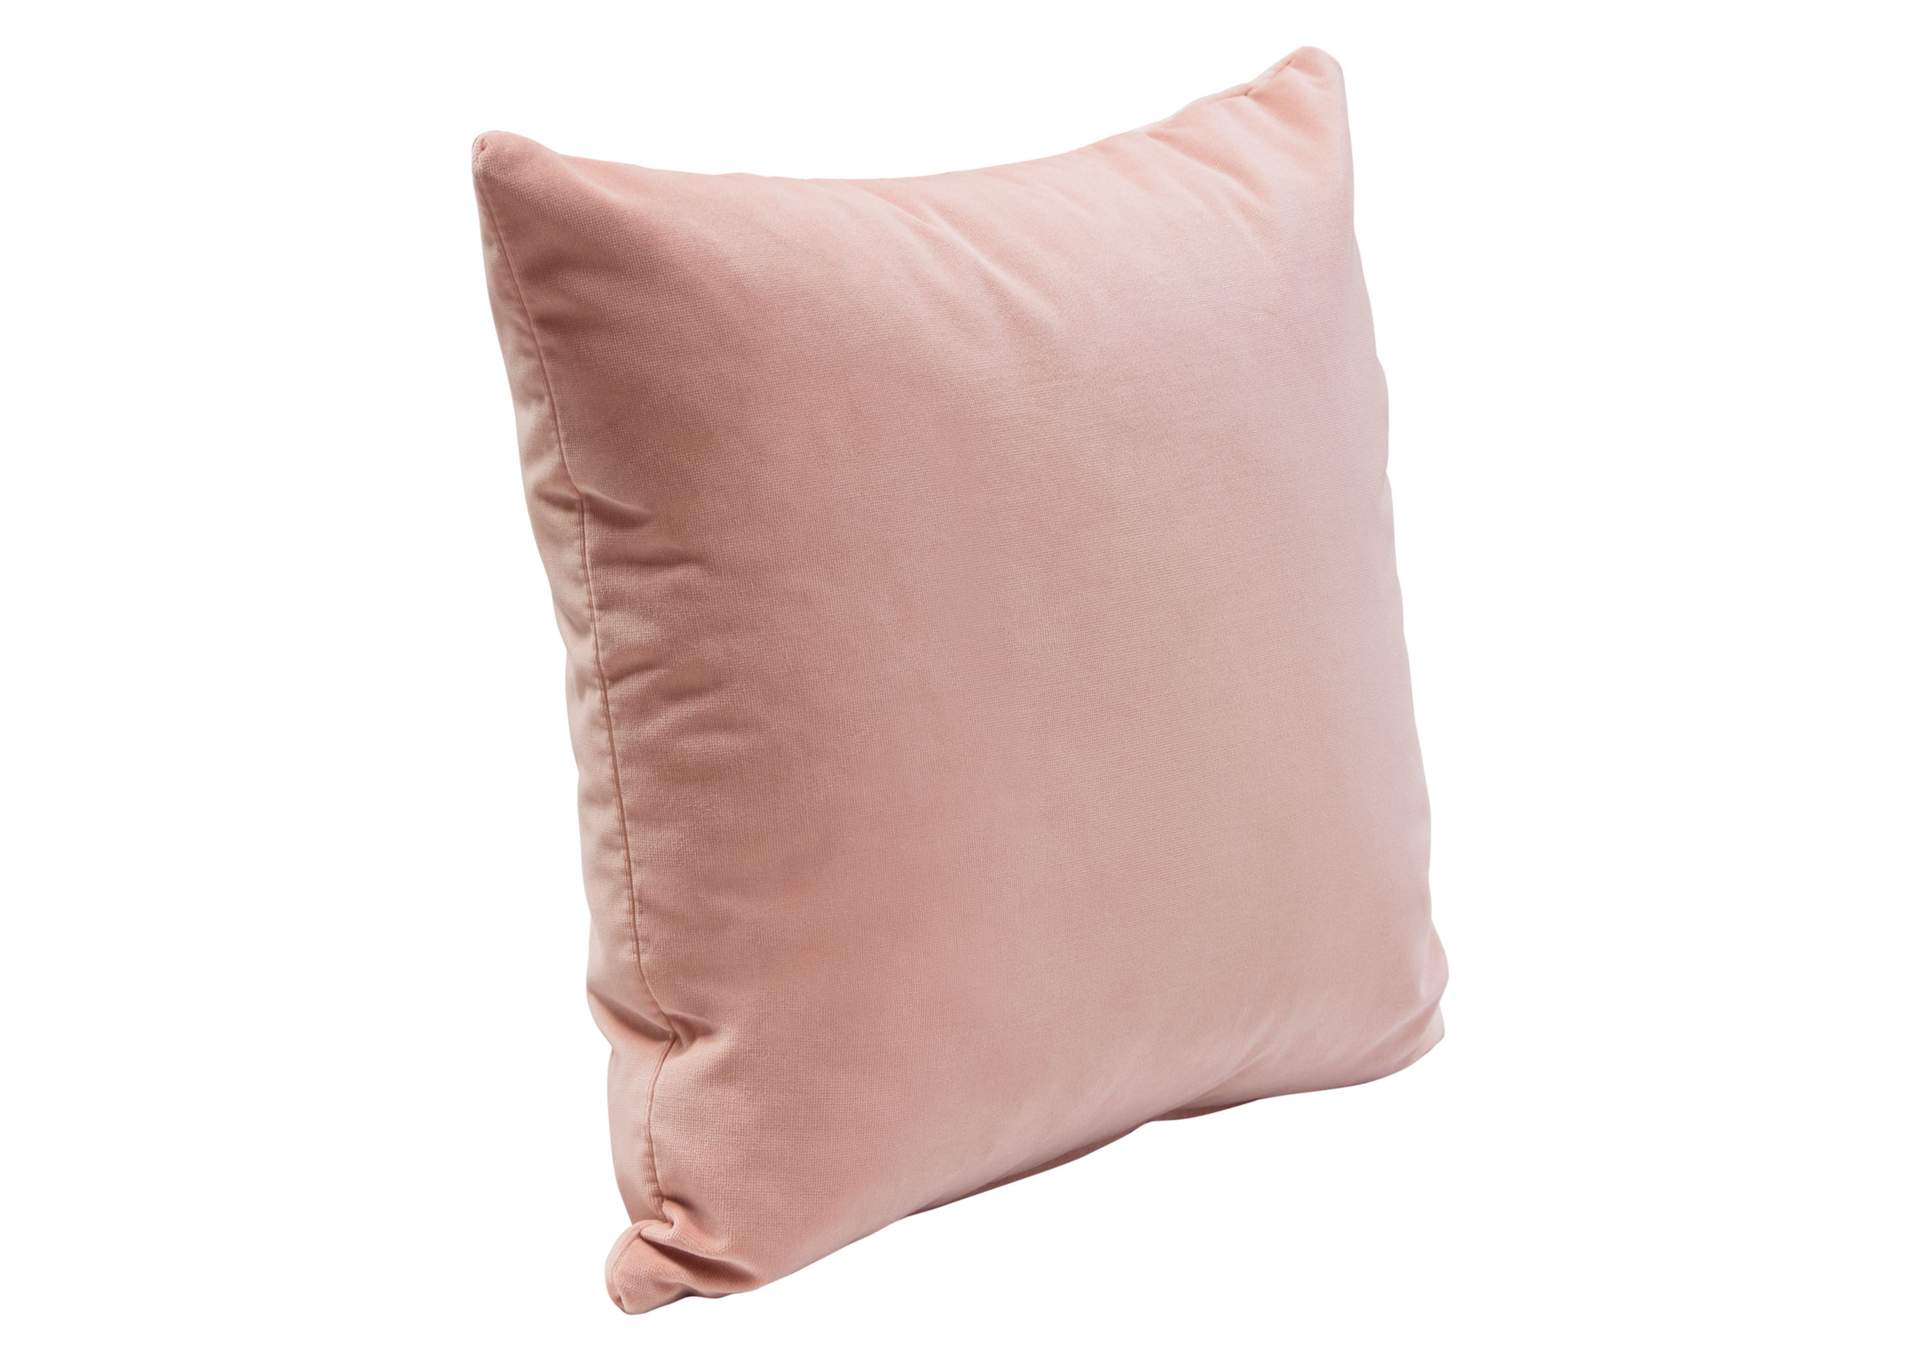 Set of (2) 16" Square Accent Pillows in Blush Pink Velvet by Diamond Sofa,Diamond Sofa